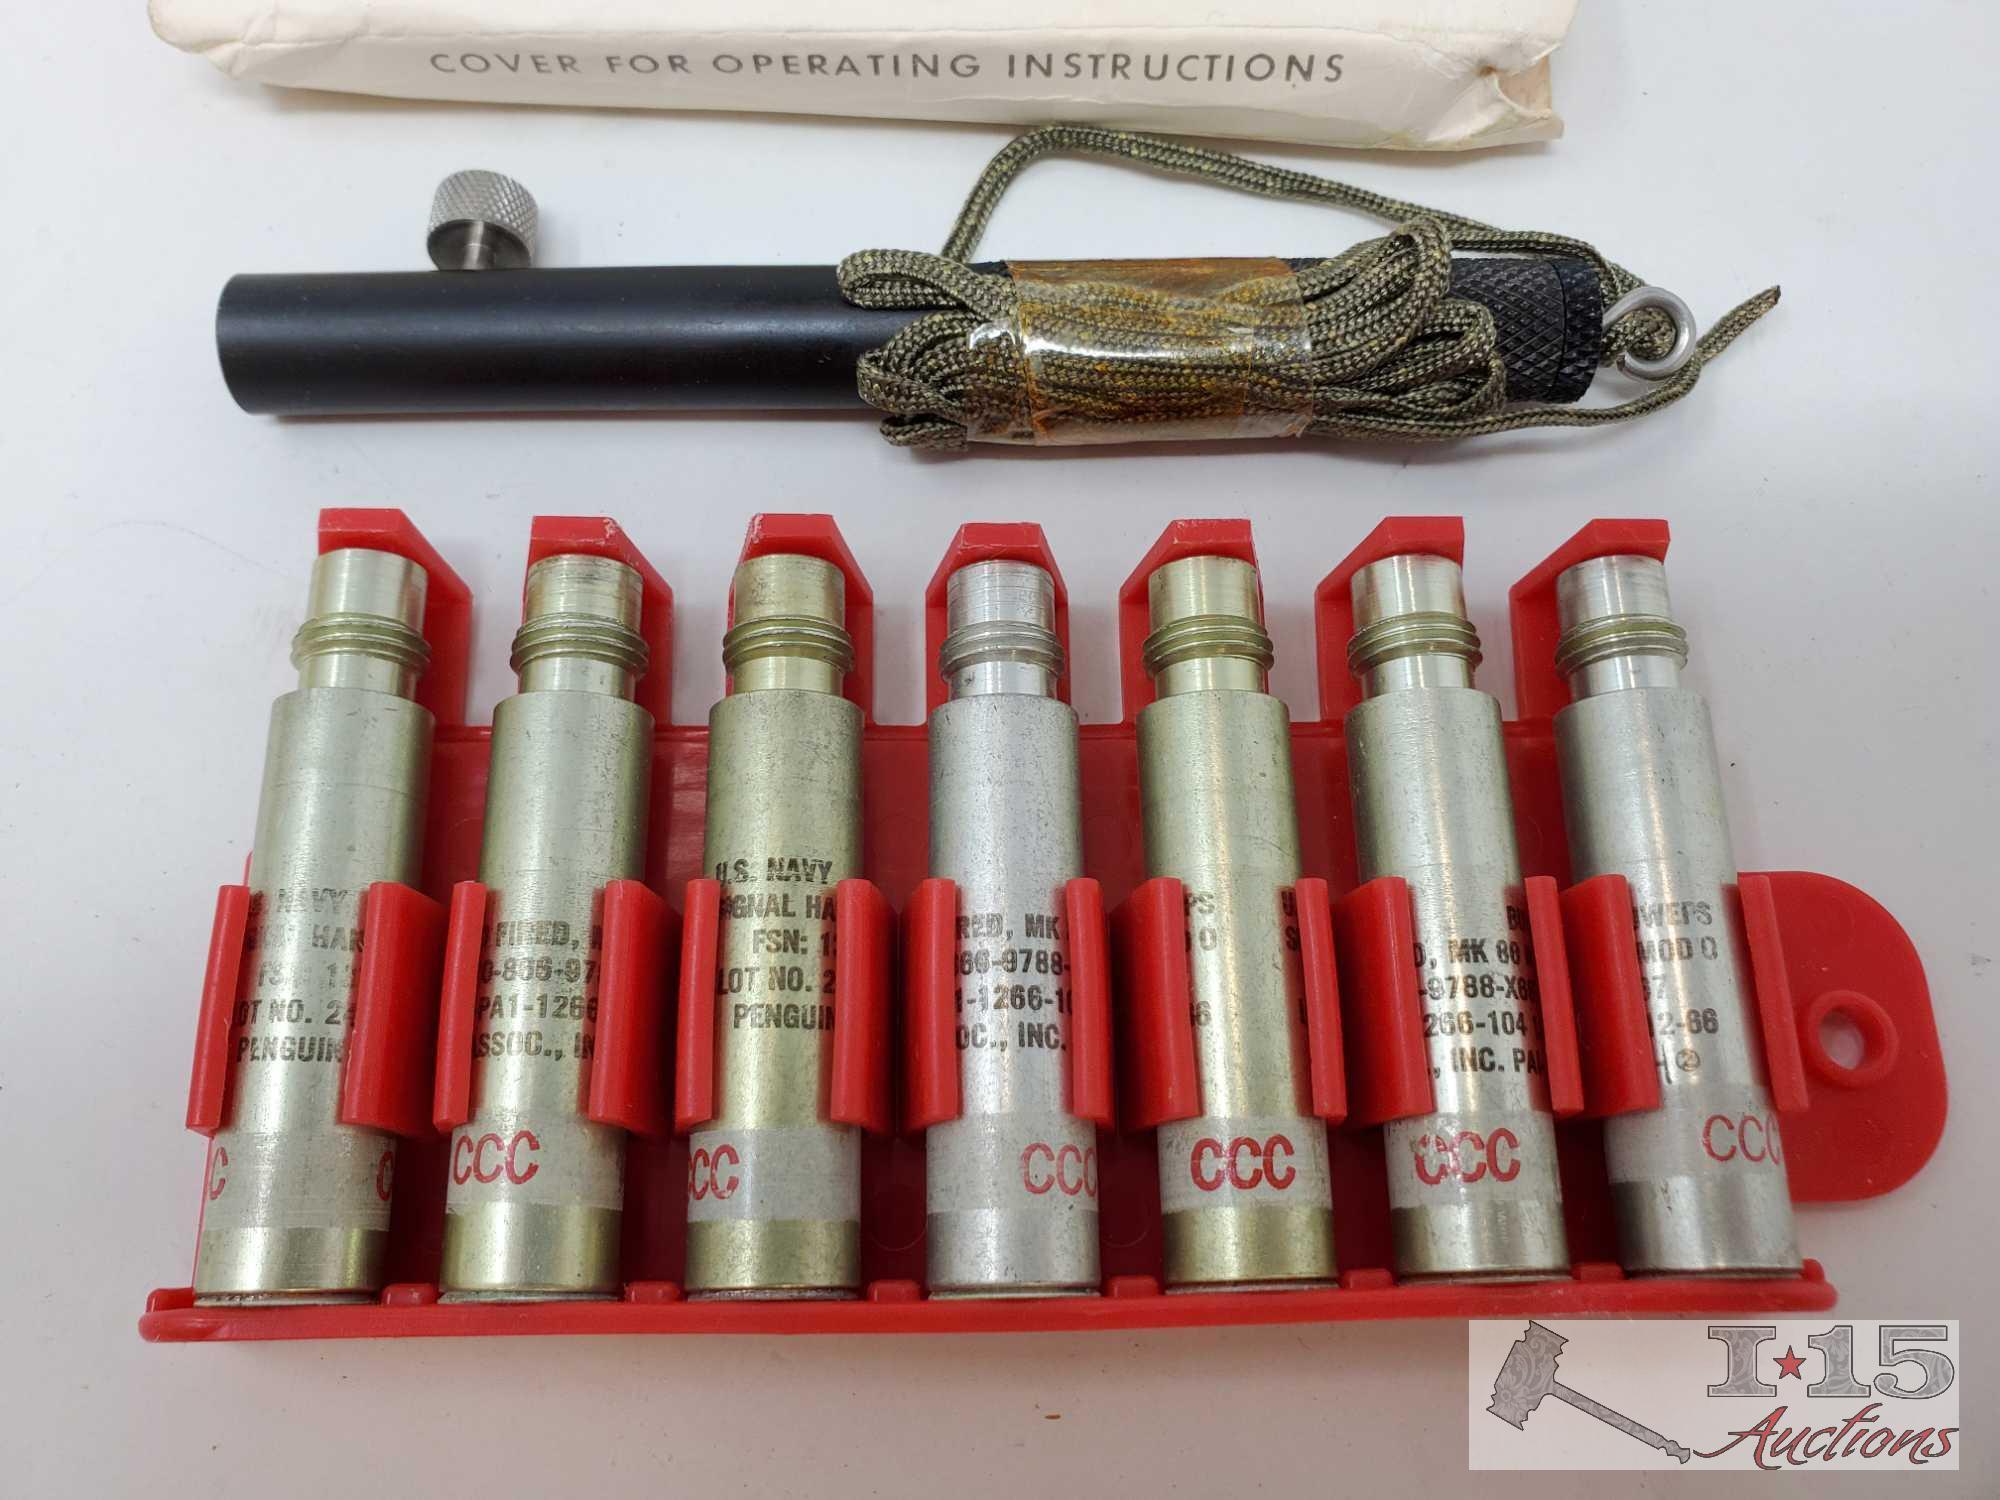 Gun Bore Cleaning Kit w/ Chemicals & Pocket Flare Gun